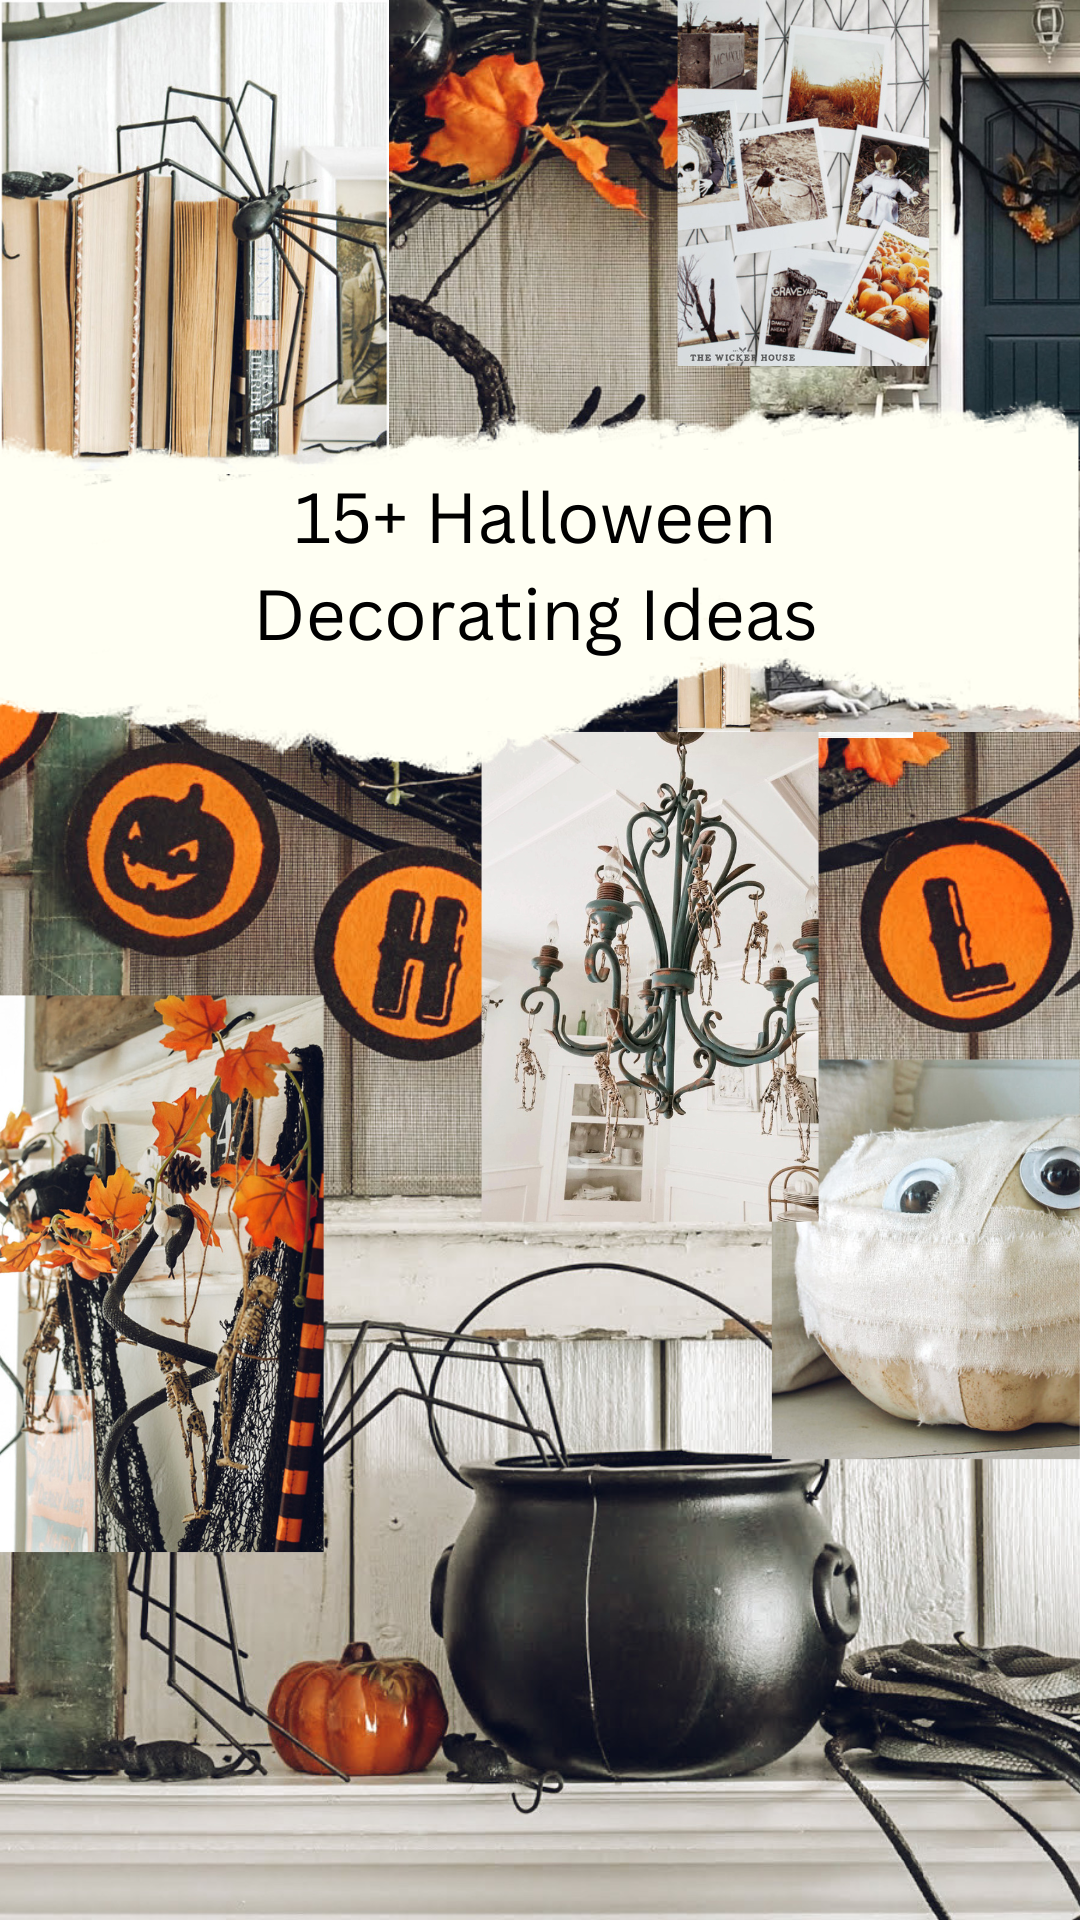 15+ Halloween Decorating Ideas